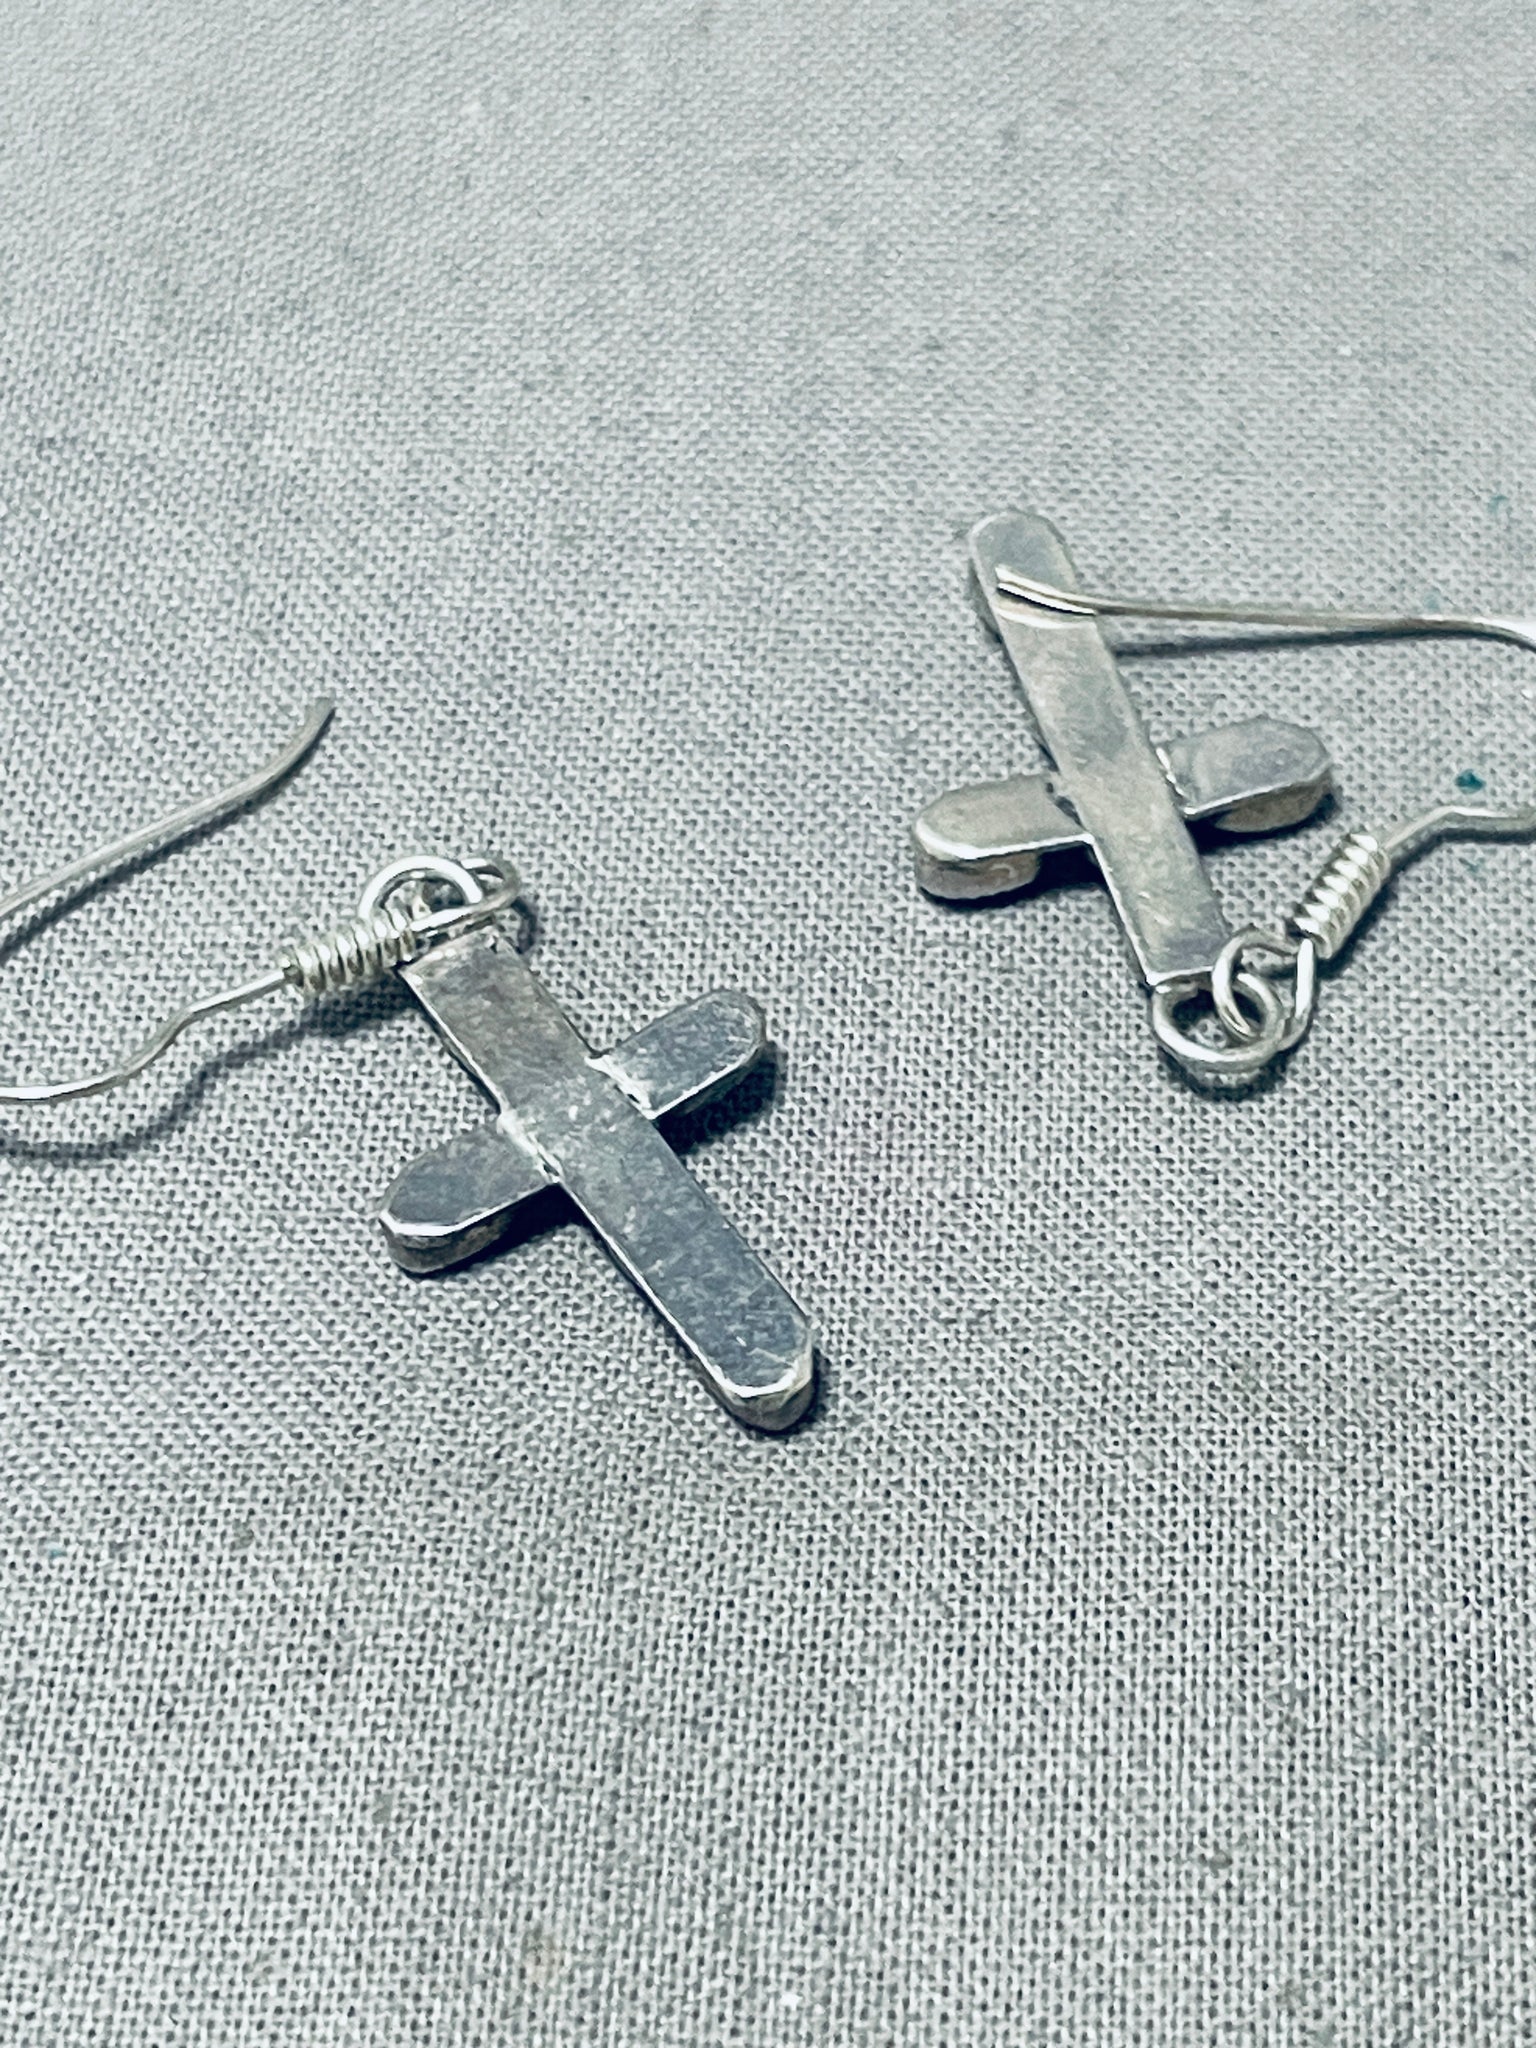 Inverted Cross Sterling Silver Earrings